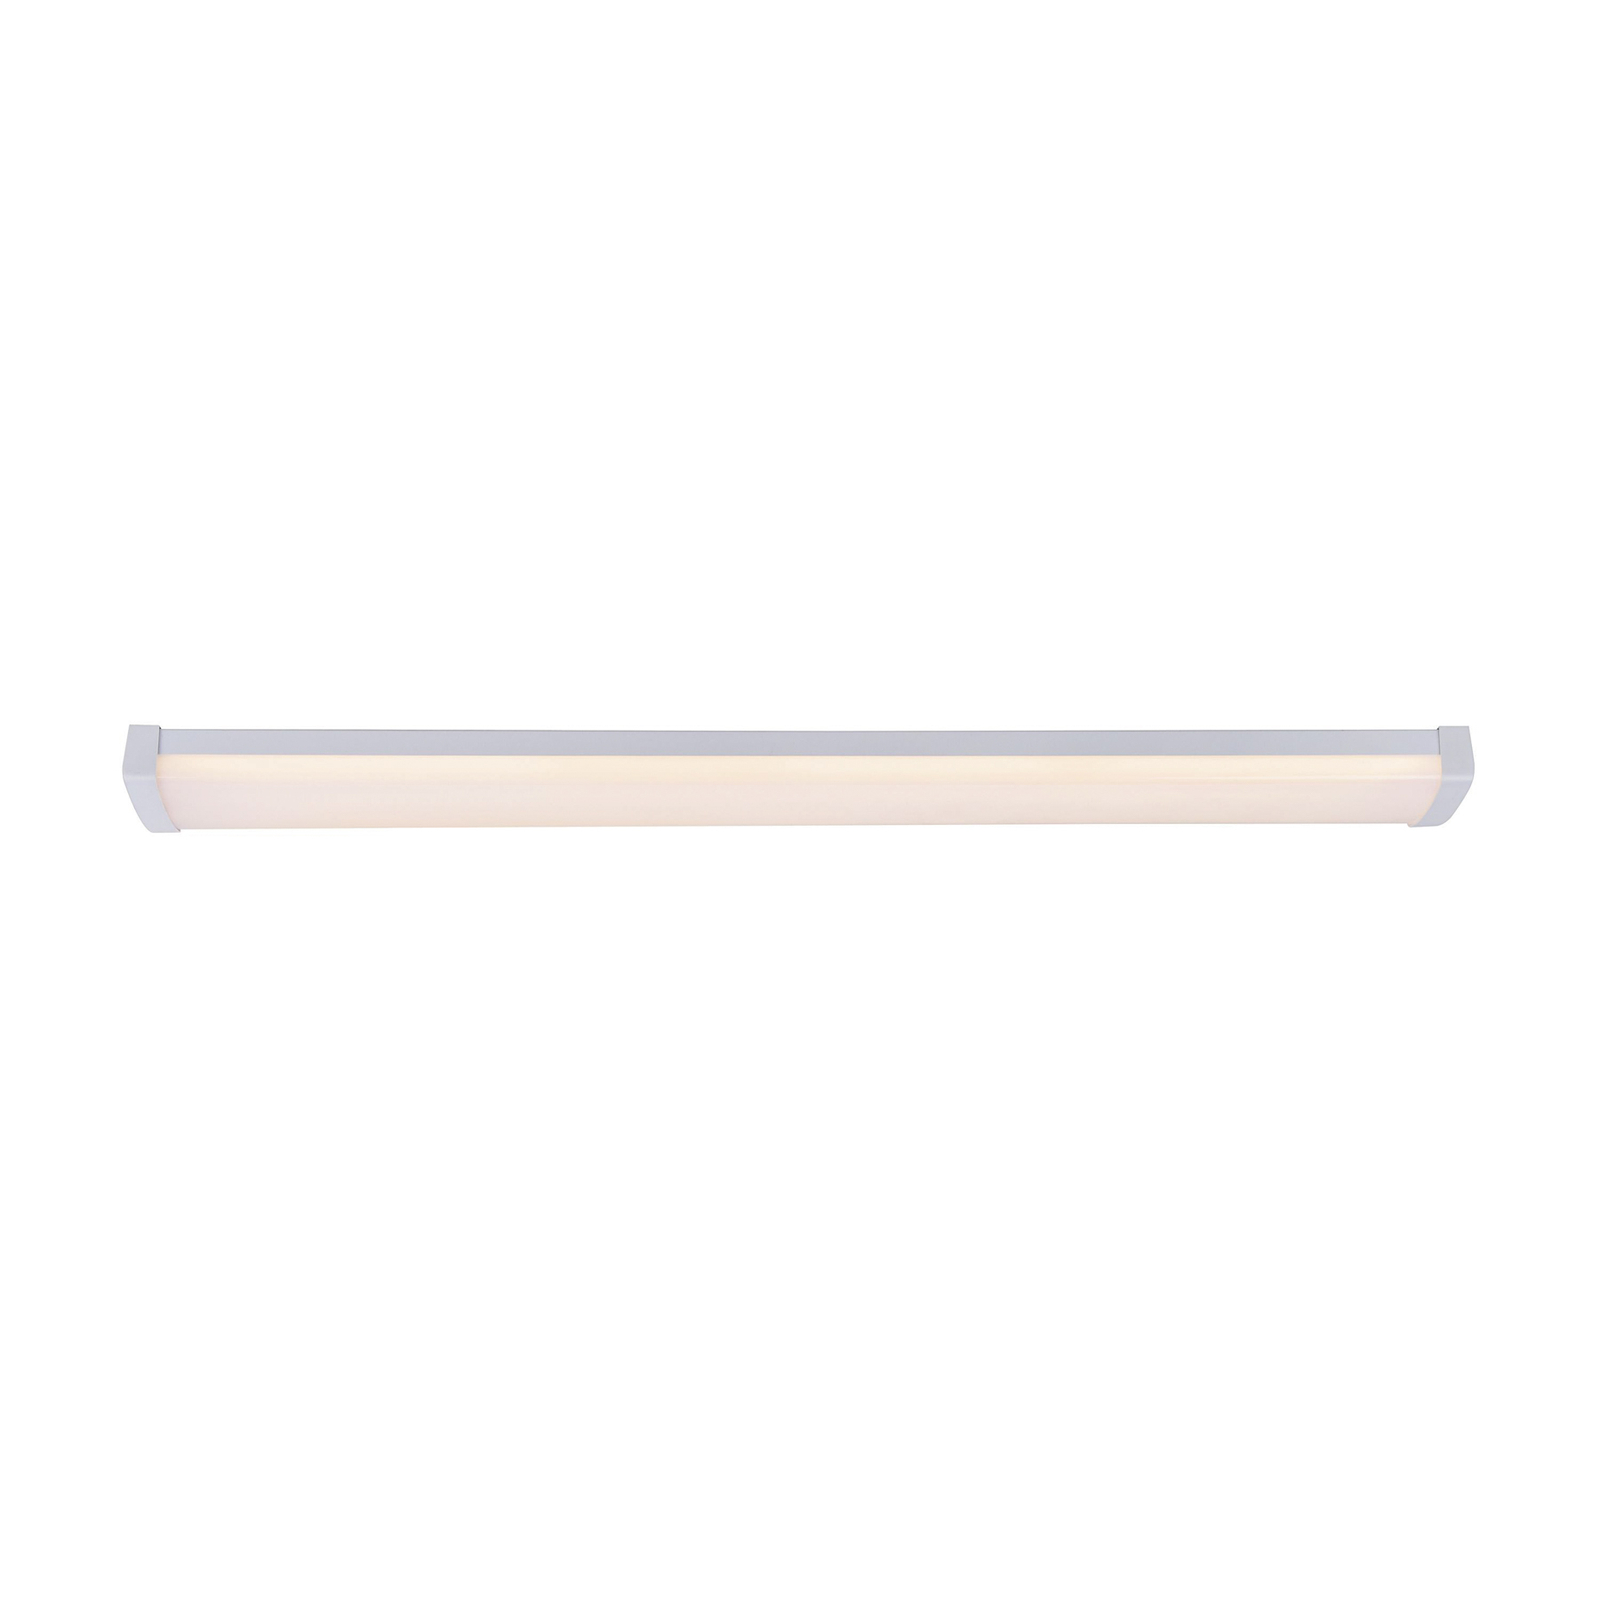 Fita luminosa LED Wilmington, comprimento 90,5 cm, branco, plástico